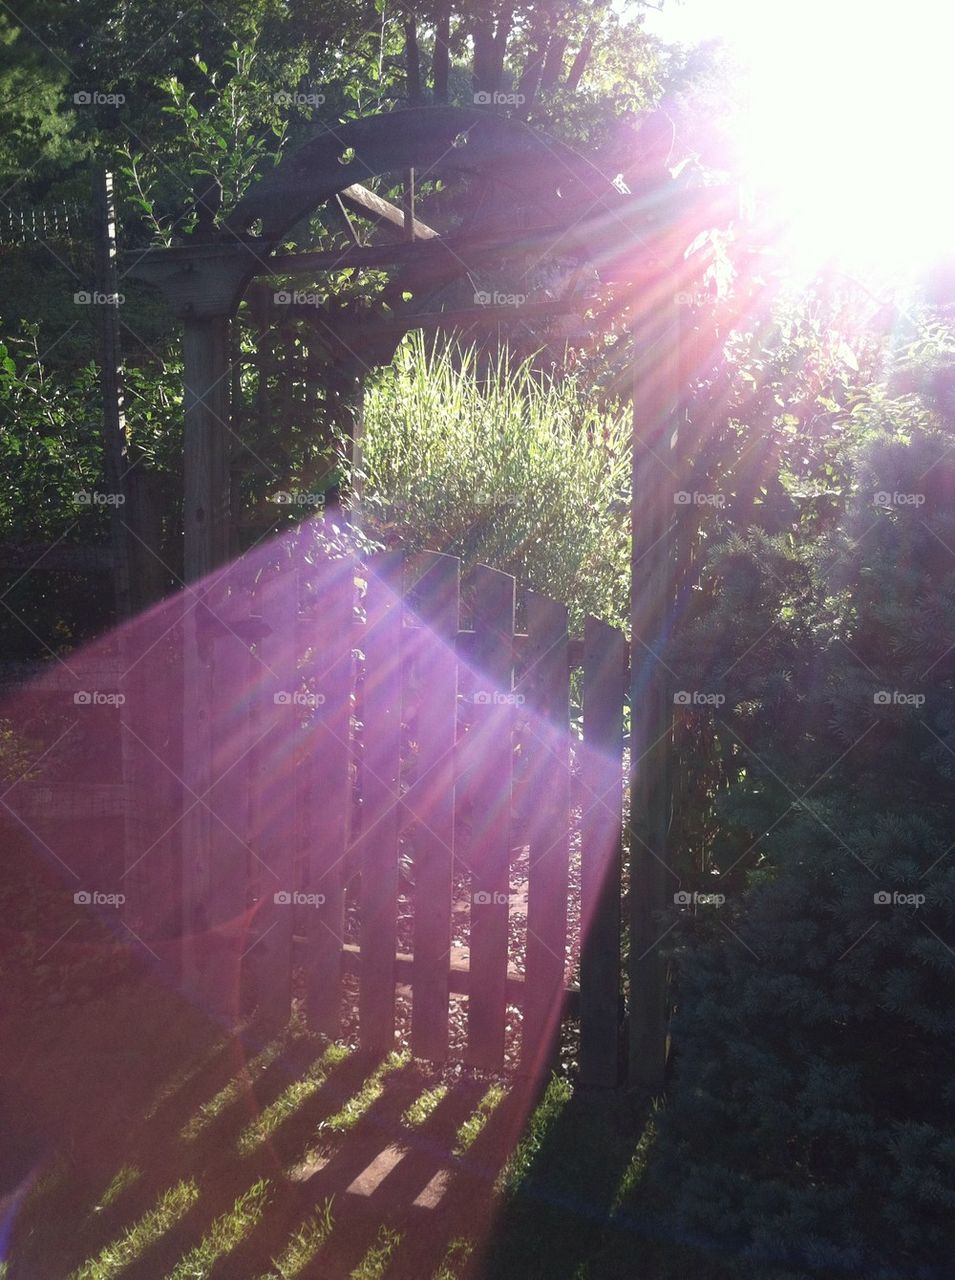 Sunshine thru the garden gate